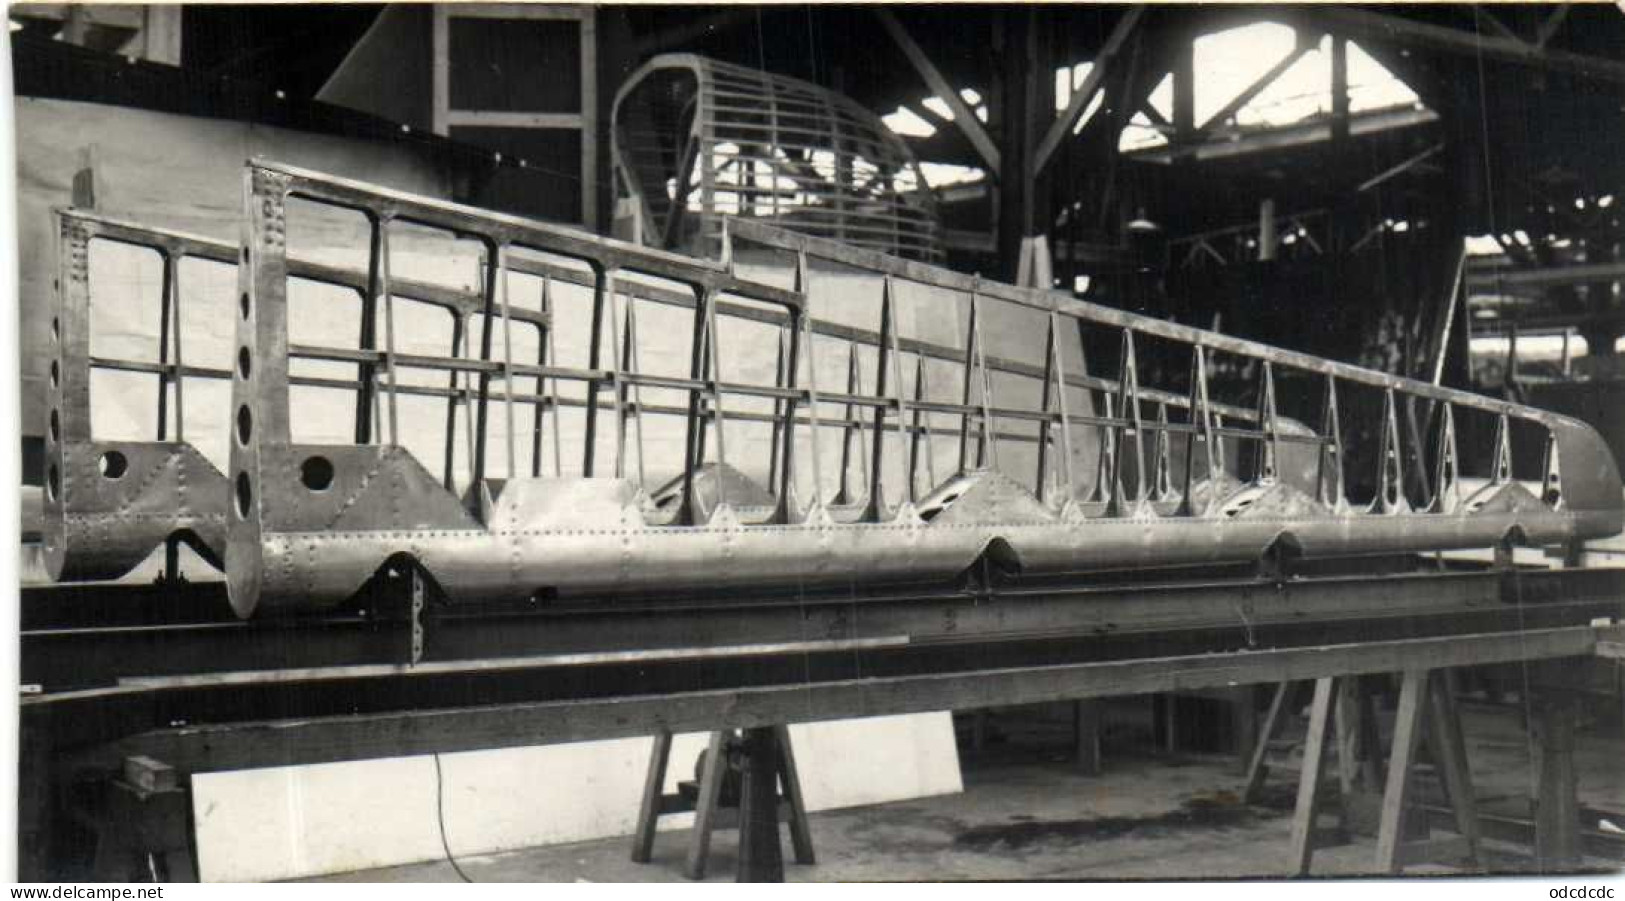 Photo 340 Amiot Stabilisateur Structure RV - 1919-1938